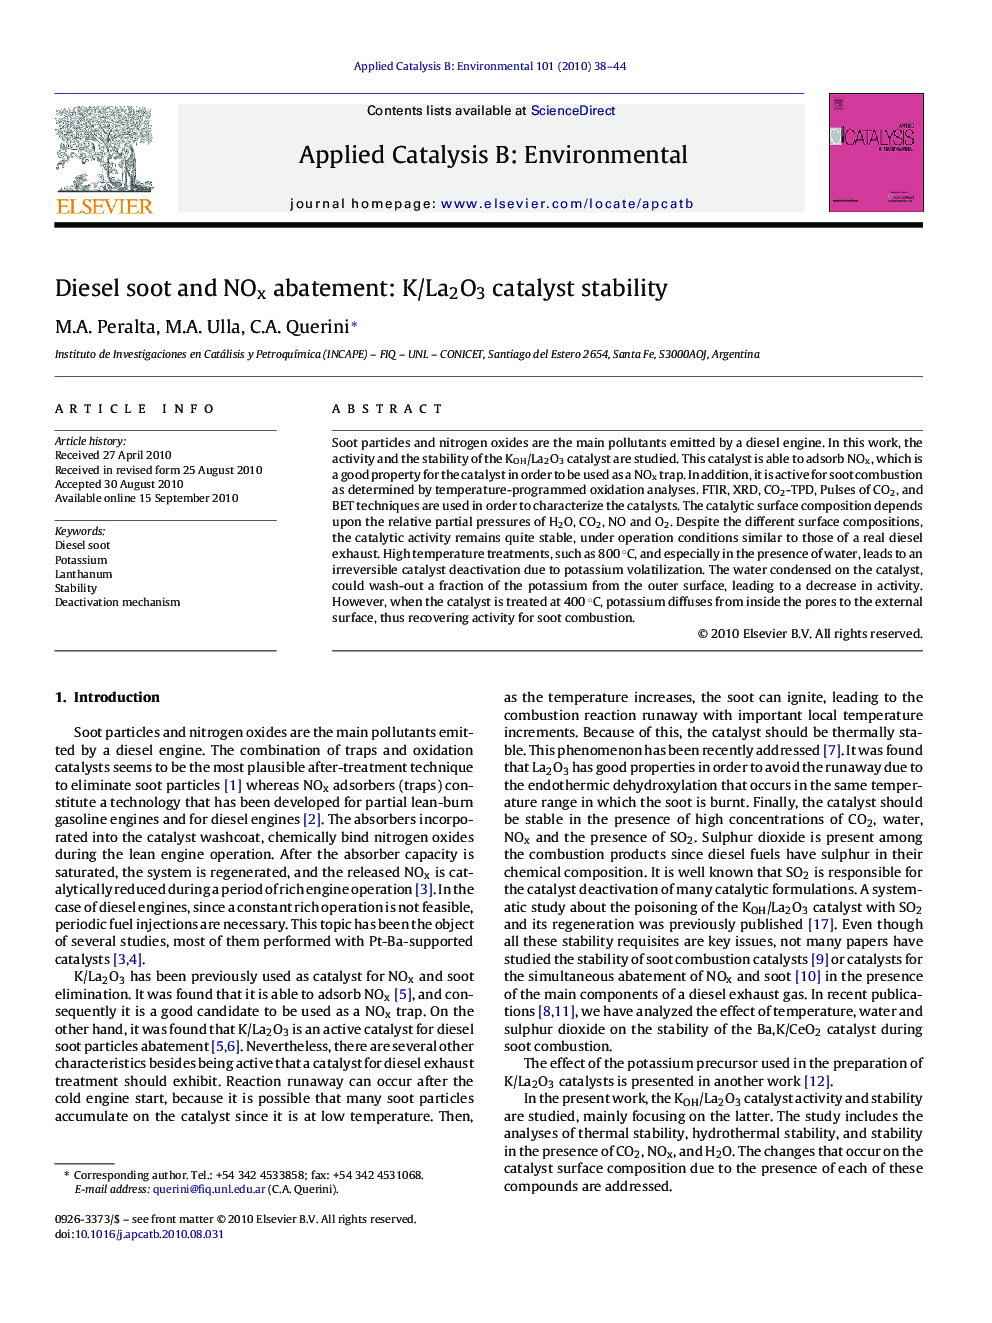 Diesel soot and NOx abatement: K/La2O3 catalyst stability